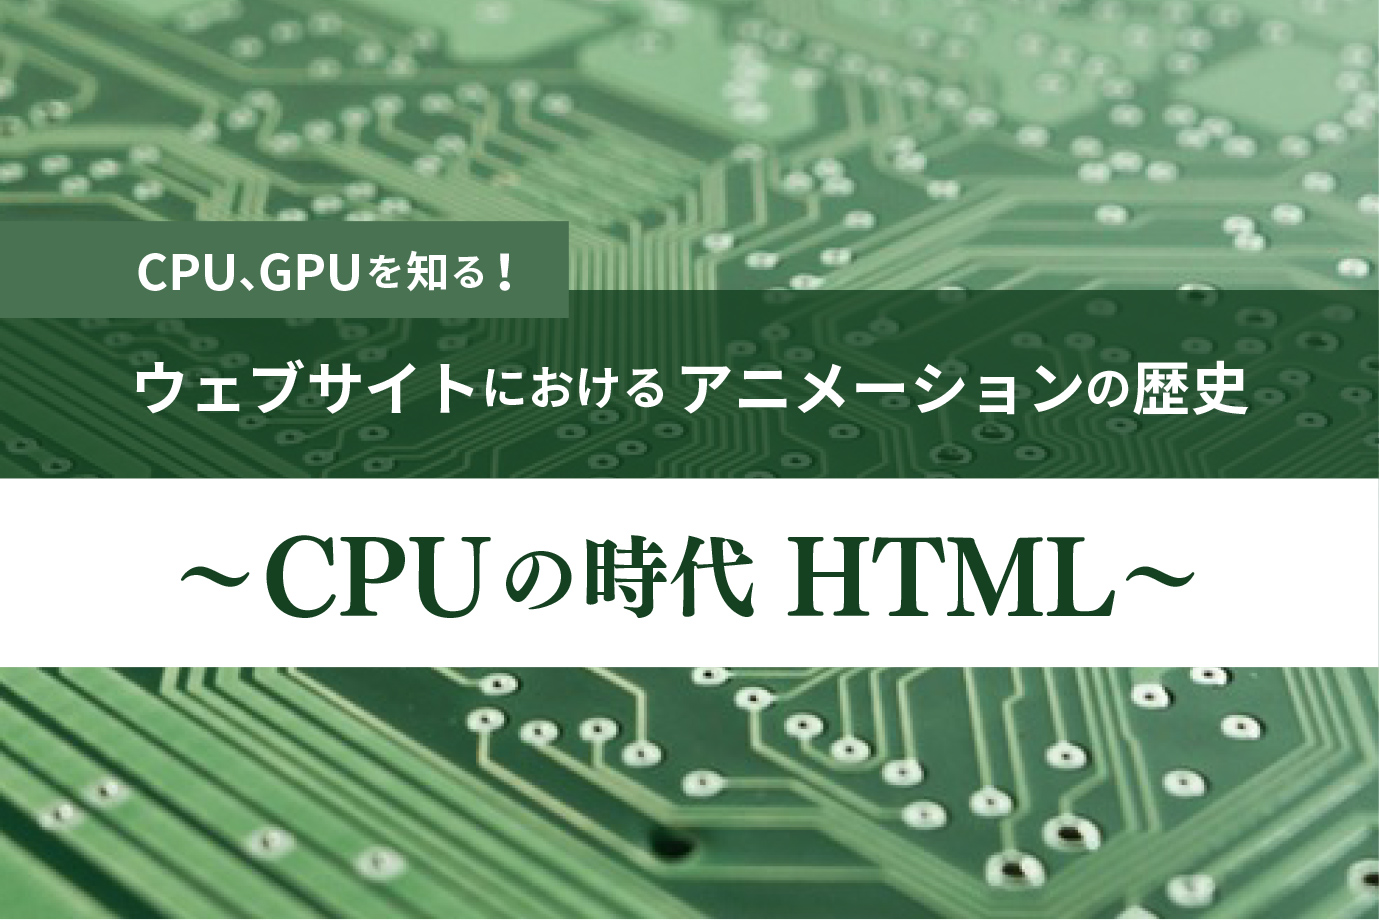 CPU、GPUを知る！『ウェブサイトにおけるアニメーションの歴史 〜CPUの時代 HTML〜』